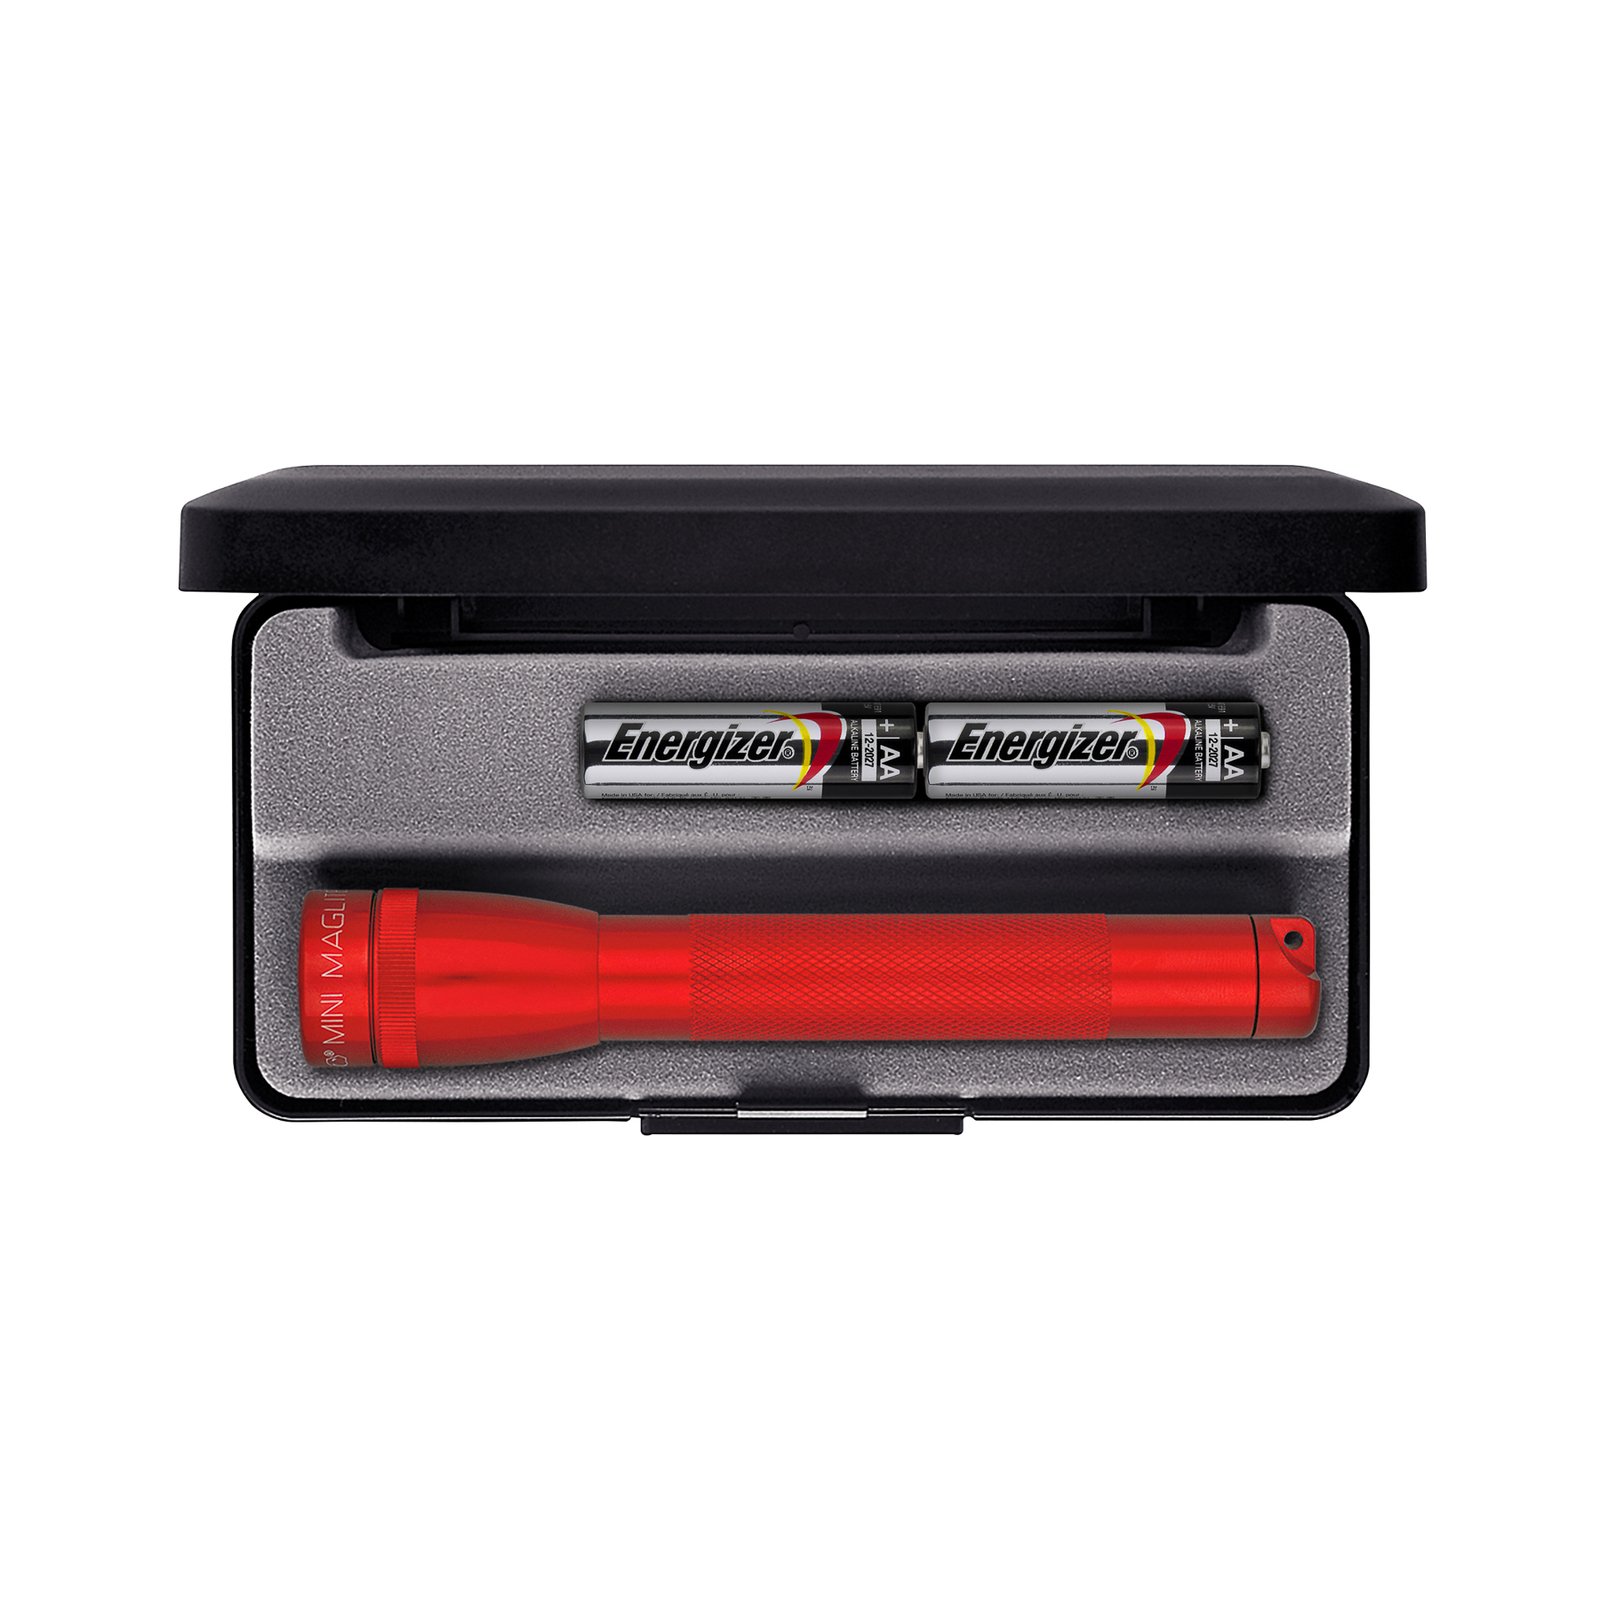 Maglite Xenon-Taschenlampe Mini, 2-Cell AA, mit Box, rot